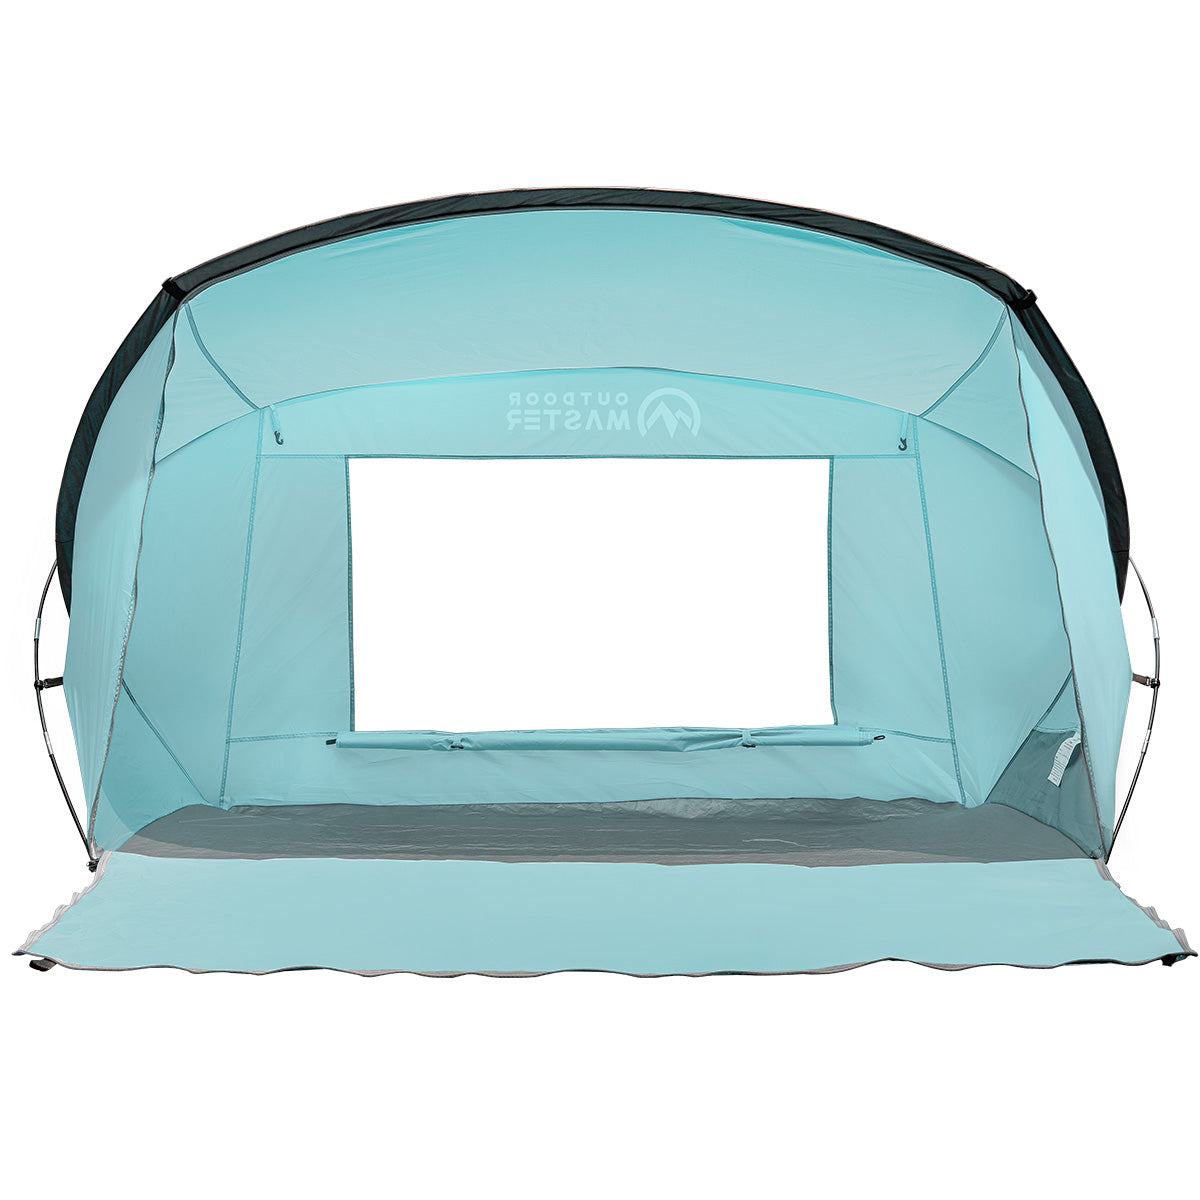 Portable Pop Up Tent